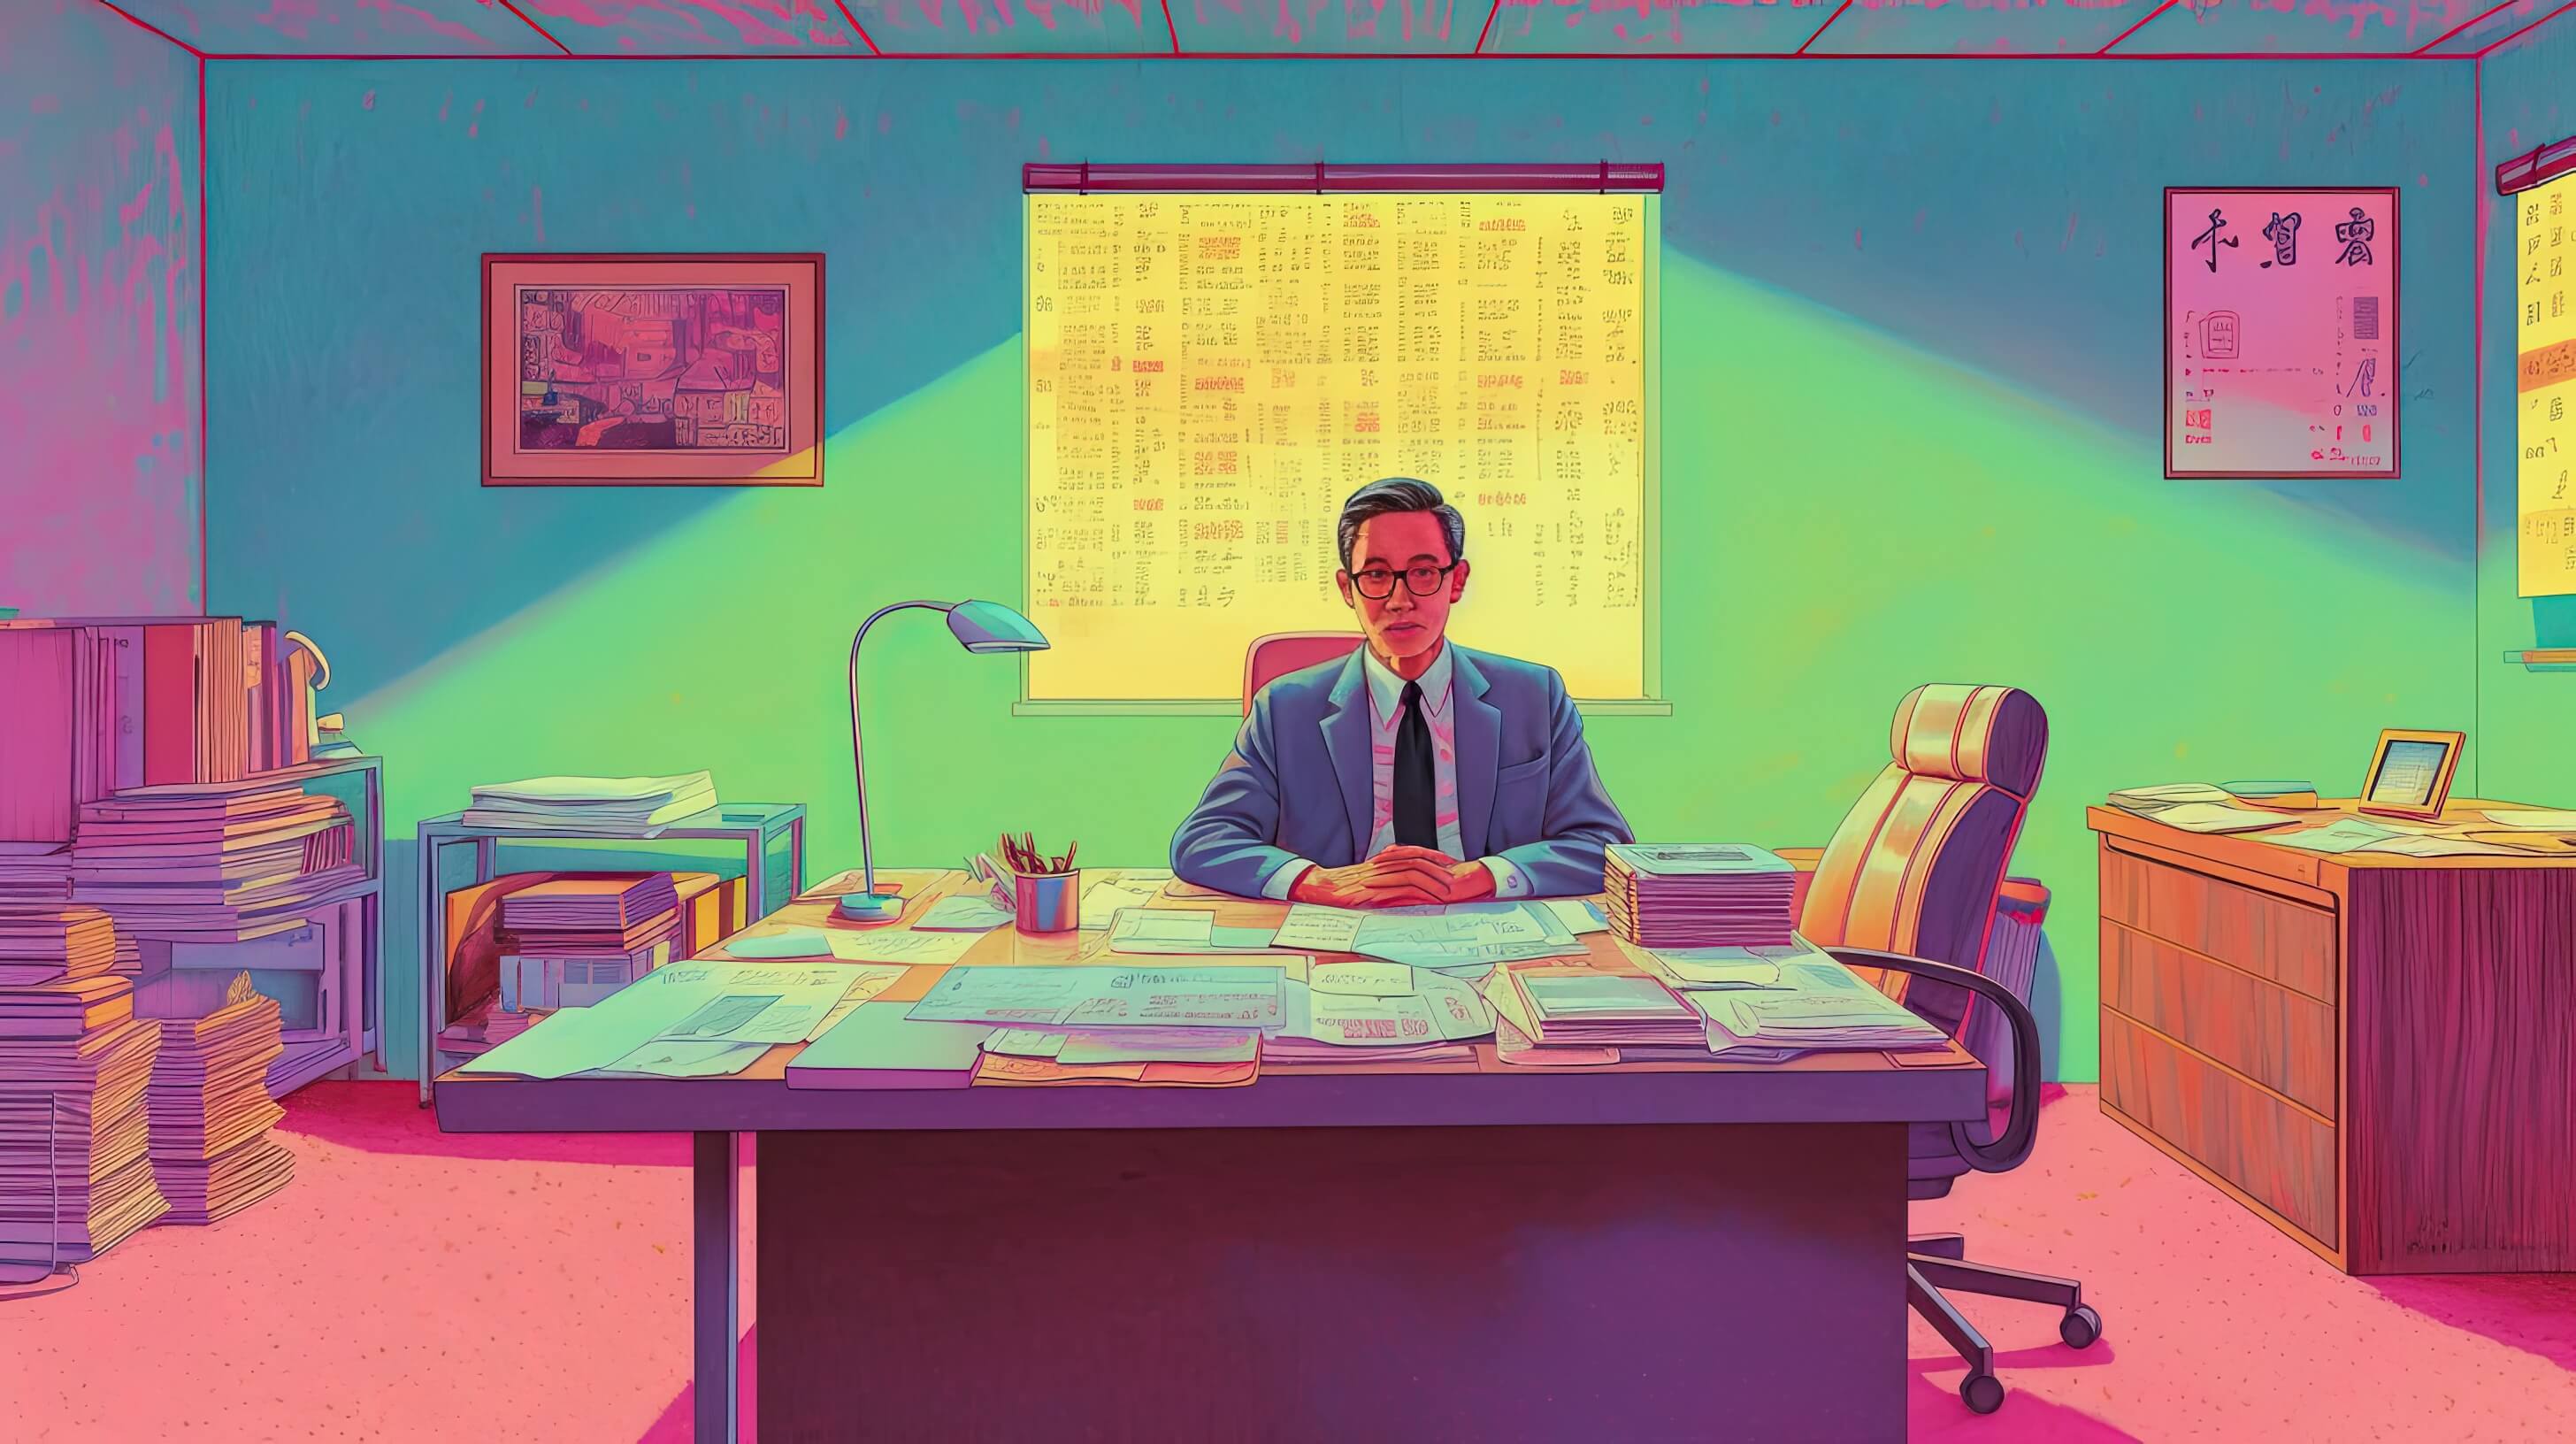 Illustration of salary man sitting at desk - artwork by Nick.